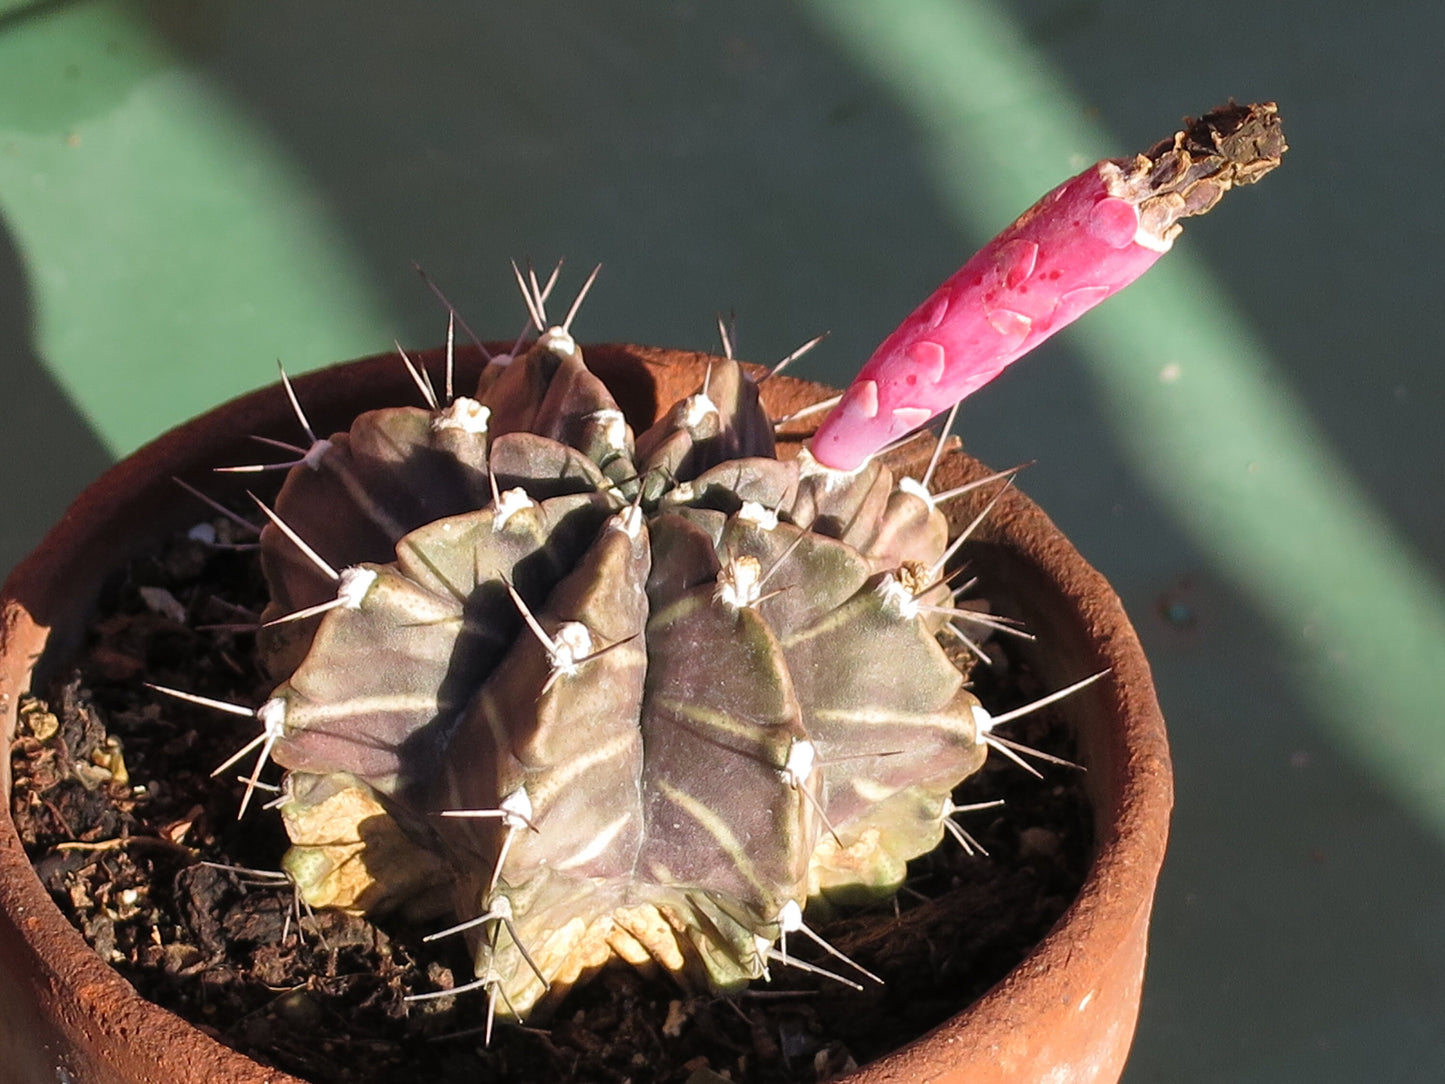 Gymnocalycium Mihanovichii Var Friedrichii * Stunning Rare Cactus * 10 Seeds *